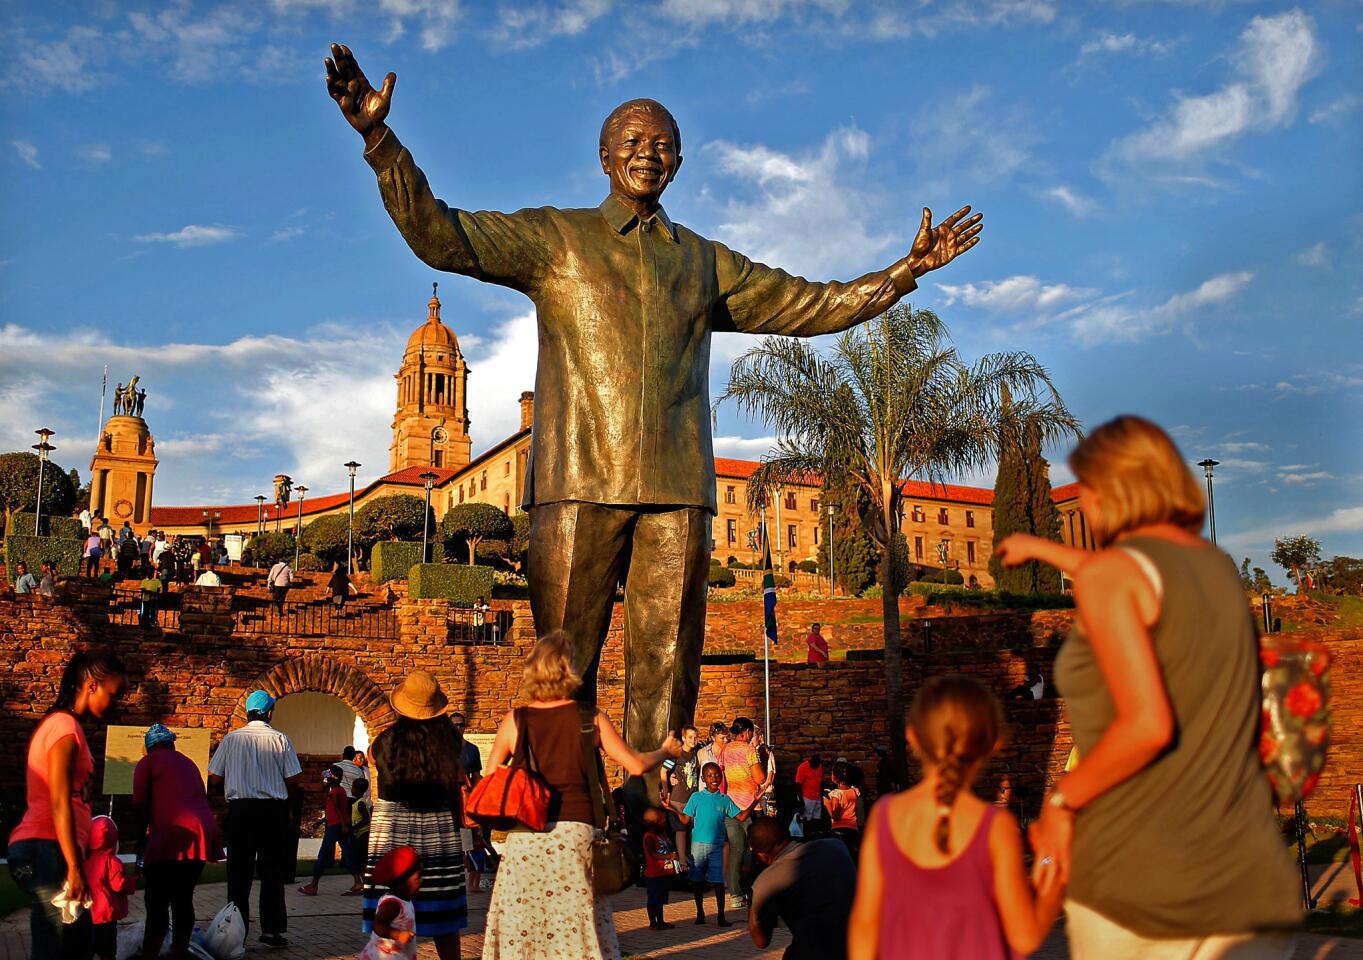 The Nelson Mandela Statue in Pretoria, South Africa